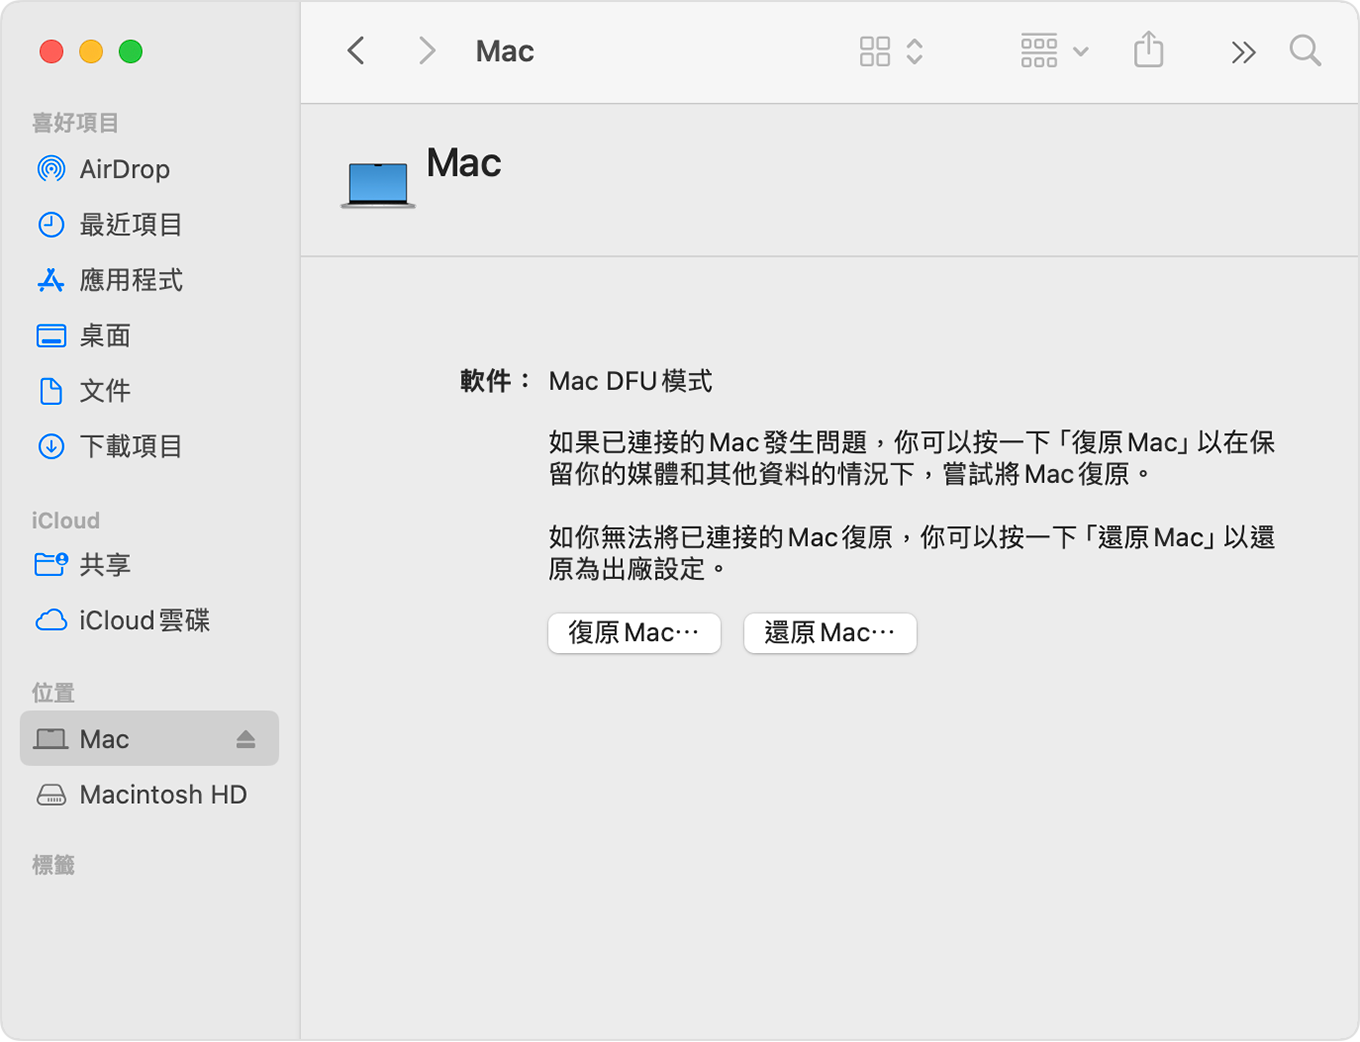 Finder 視窗的側邊欄中顯示已選取「Mac」